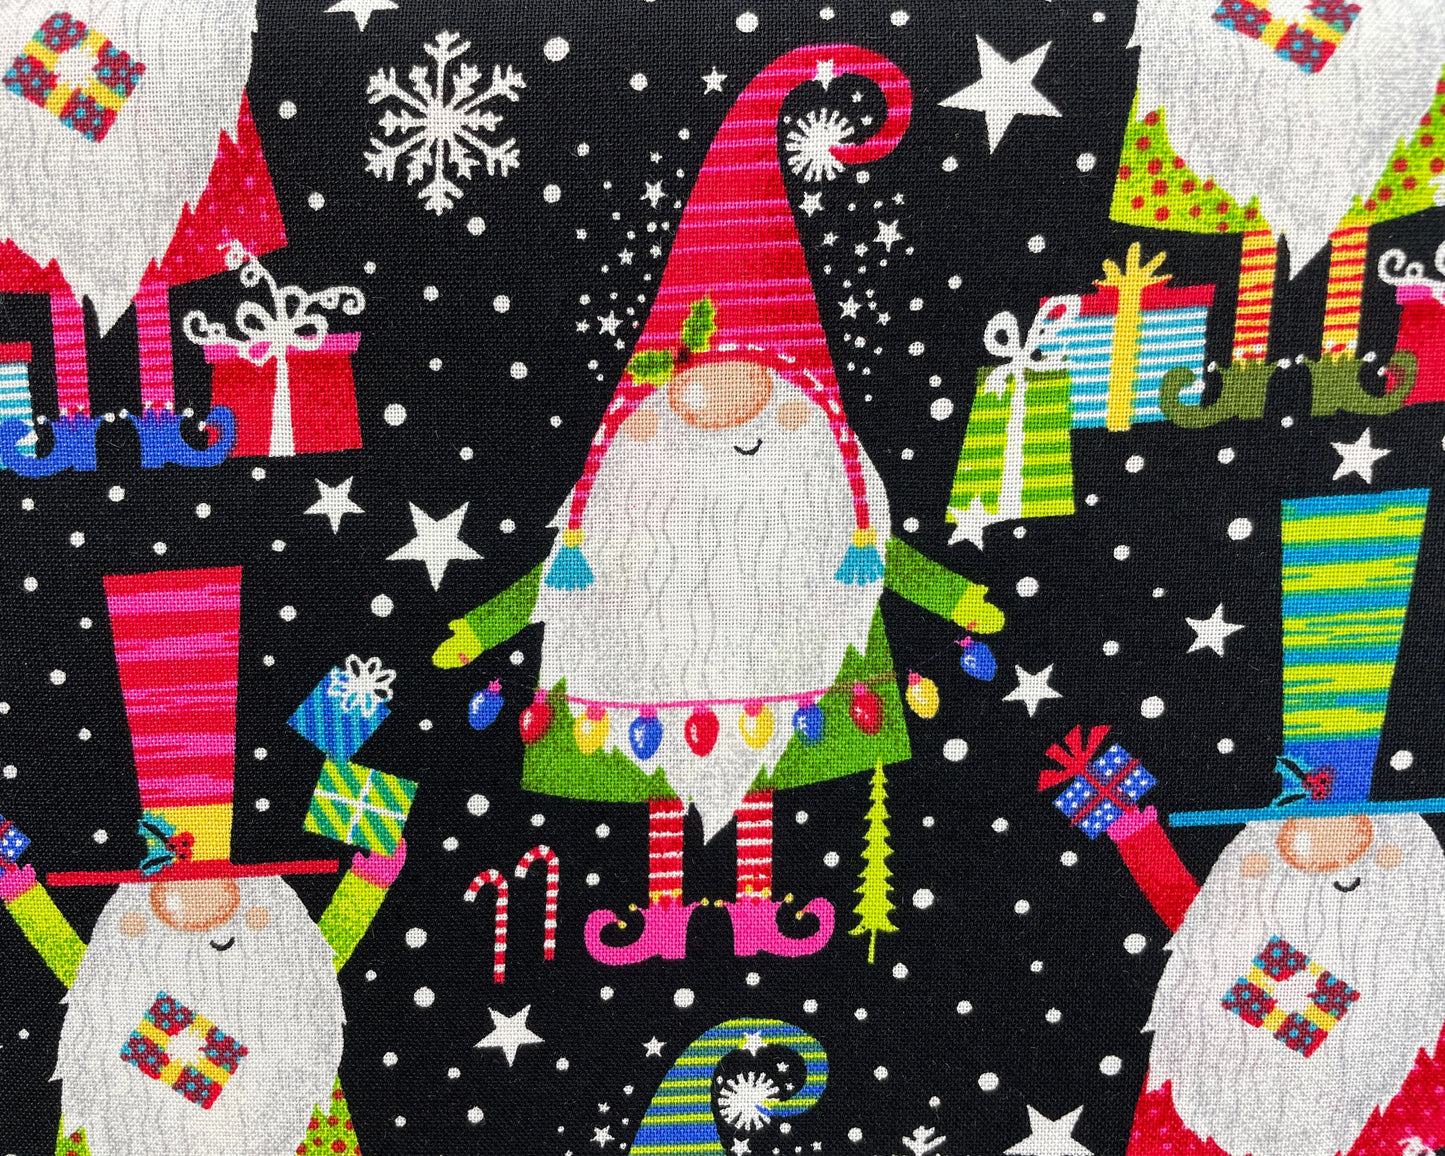 Gnome Holiday Fabric - Gnomes Bearing Gifts - 100% cotton fabric - Holiday Christmas Gnome Fabric by Fabric Traditions - SHIPS NEXT DAY